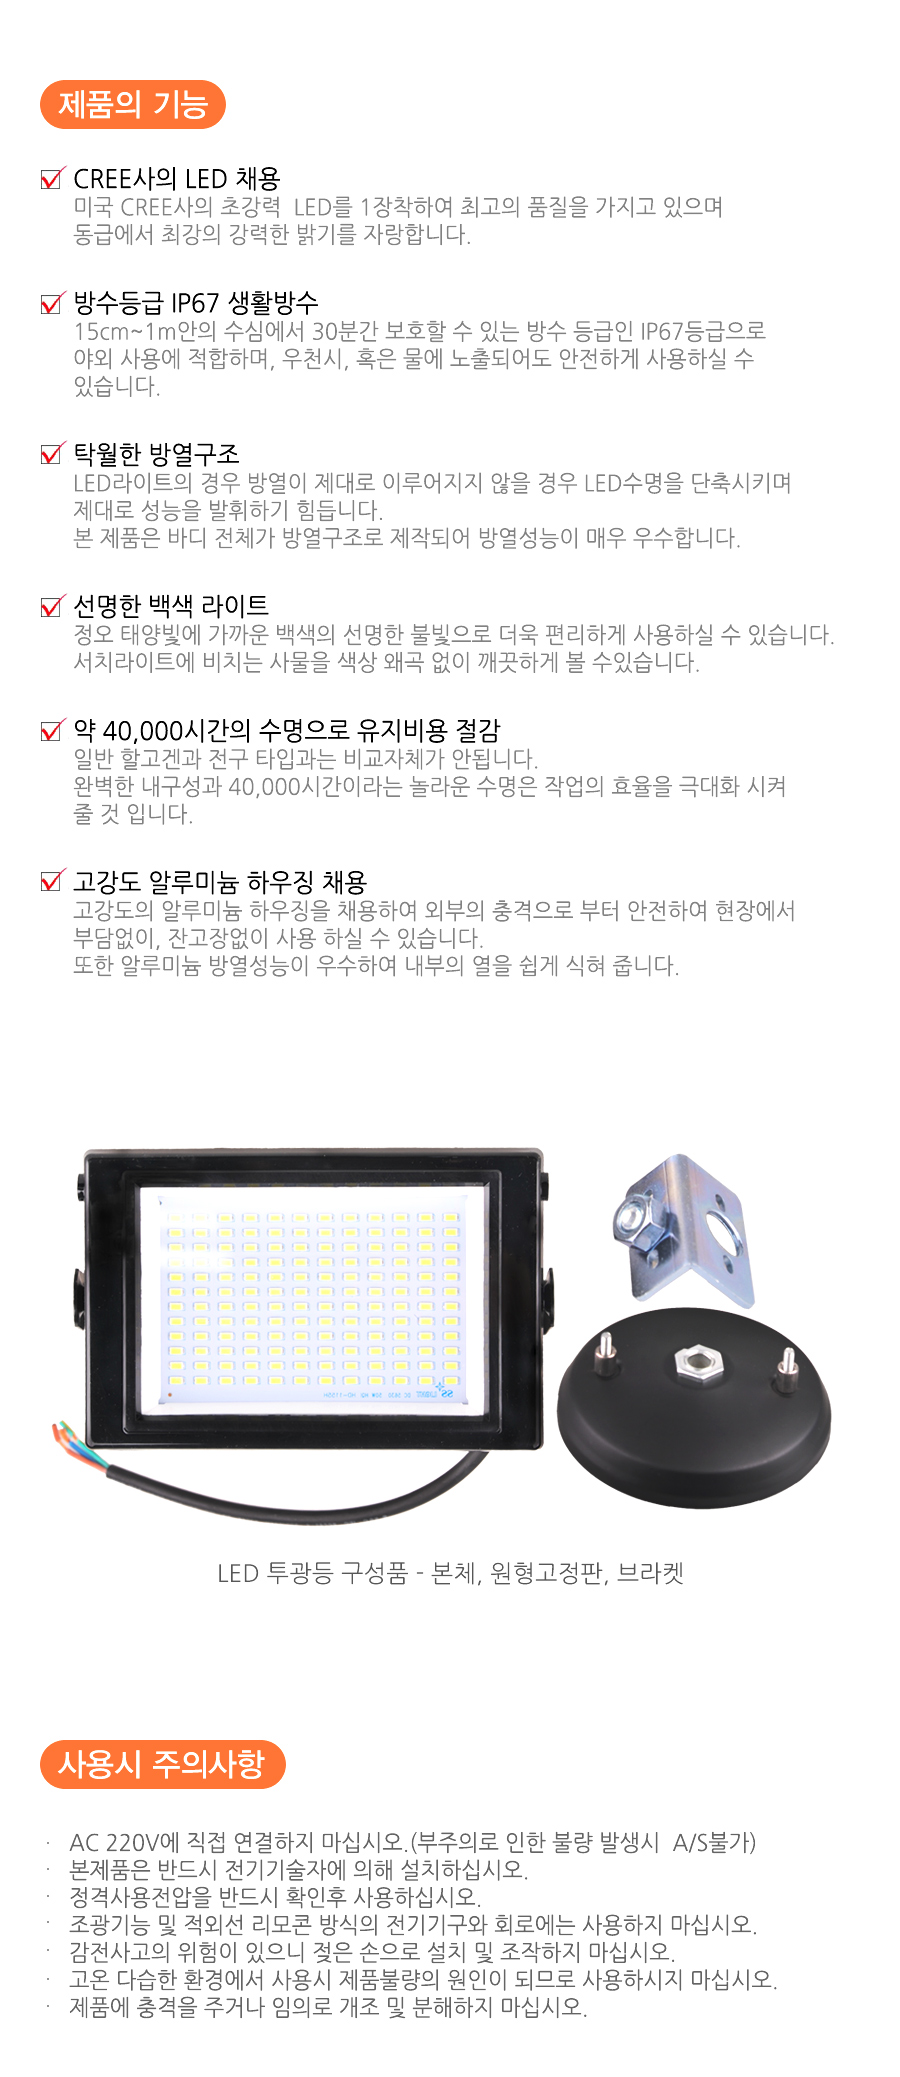 SSũ DC LED (50W) (MADE IN KOREA) ڿ ǰ  